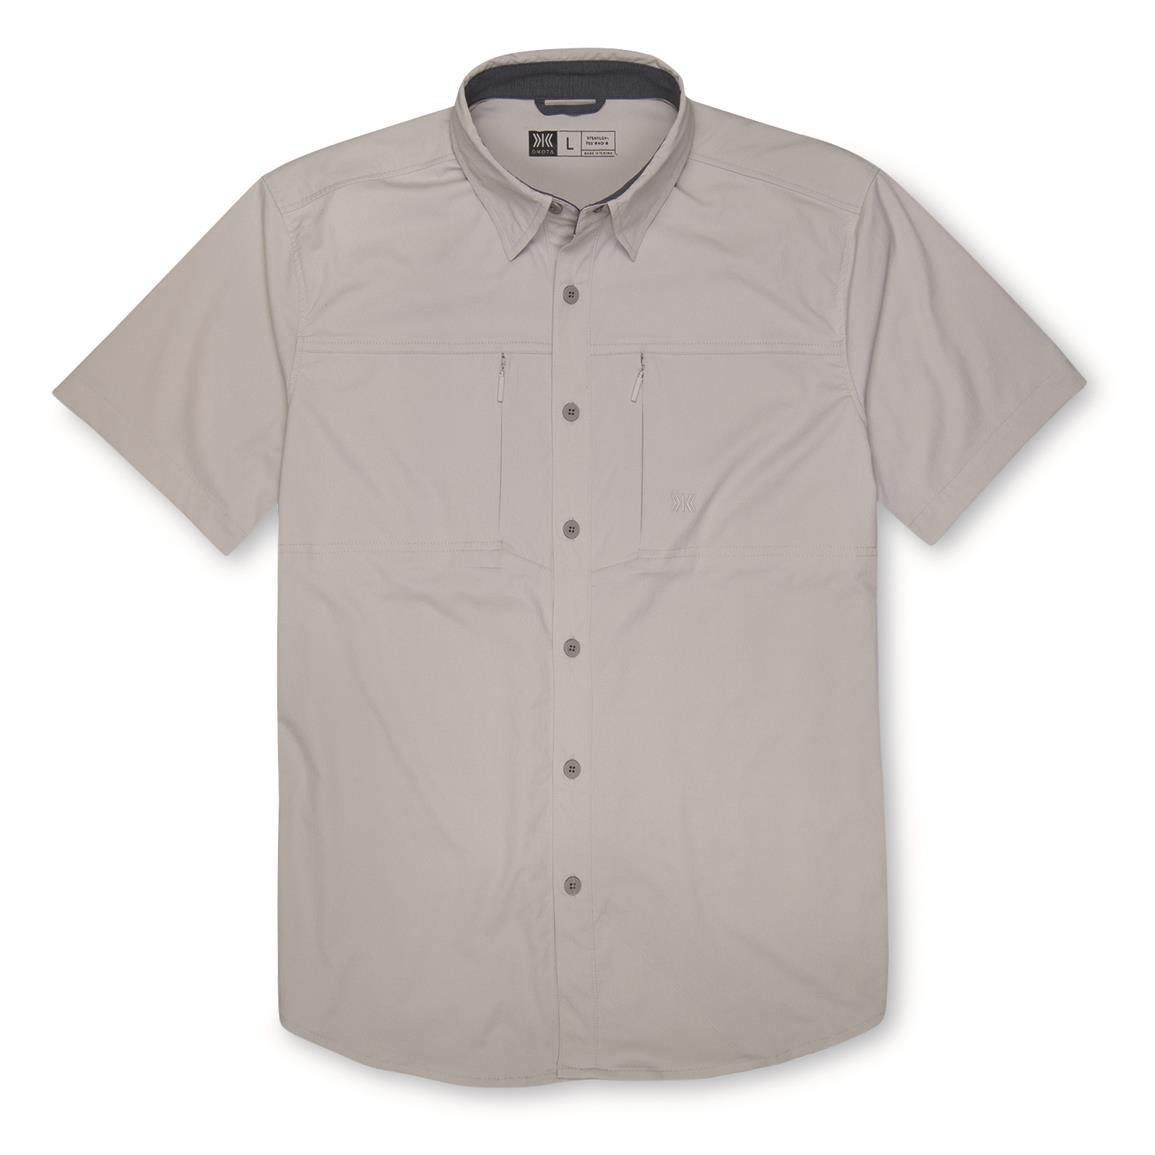 DKOTA GRIZZLY Men's Barkley Button Front Short-Sleeve Shirt, Vapor